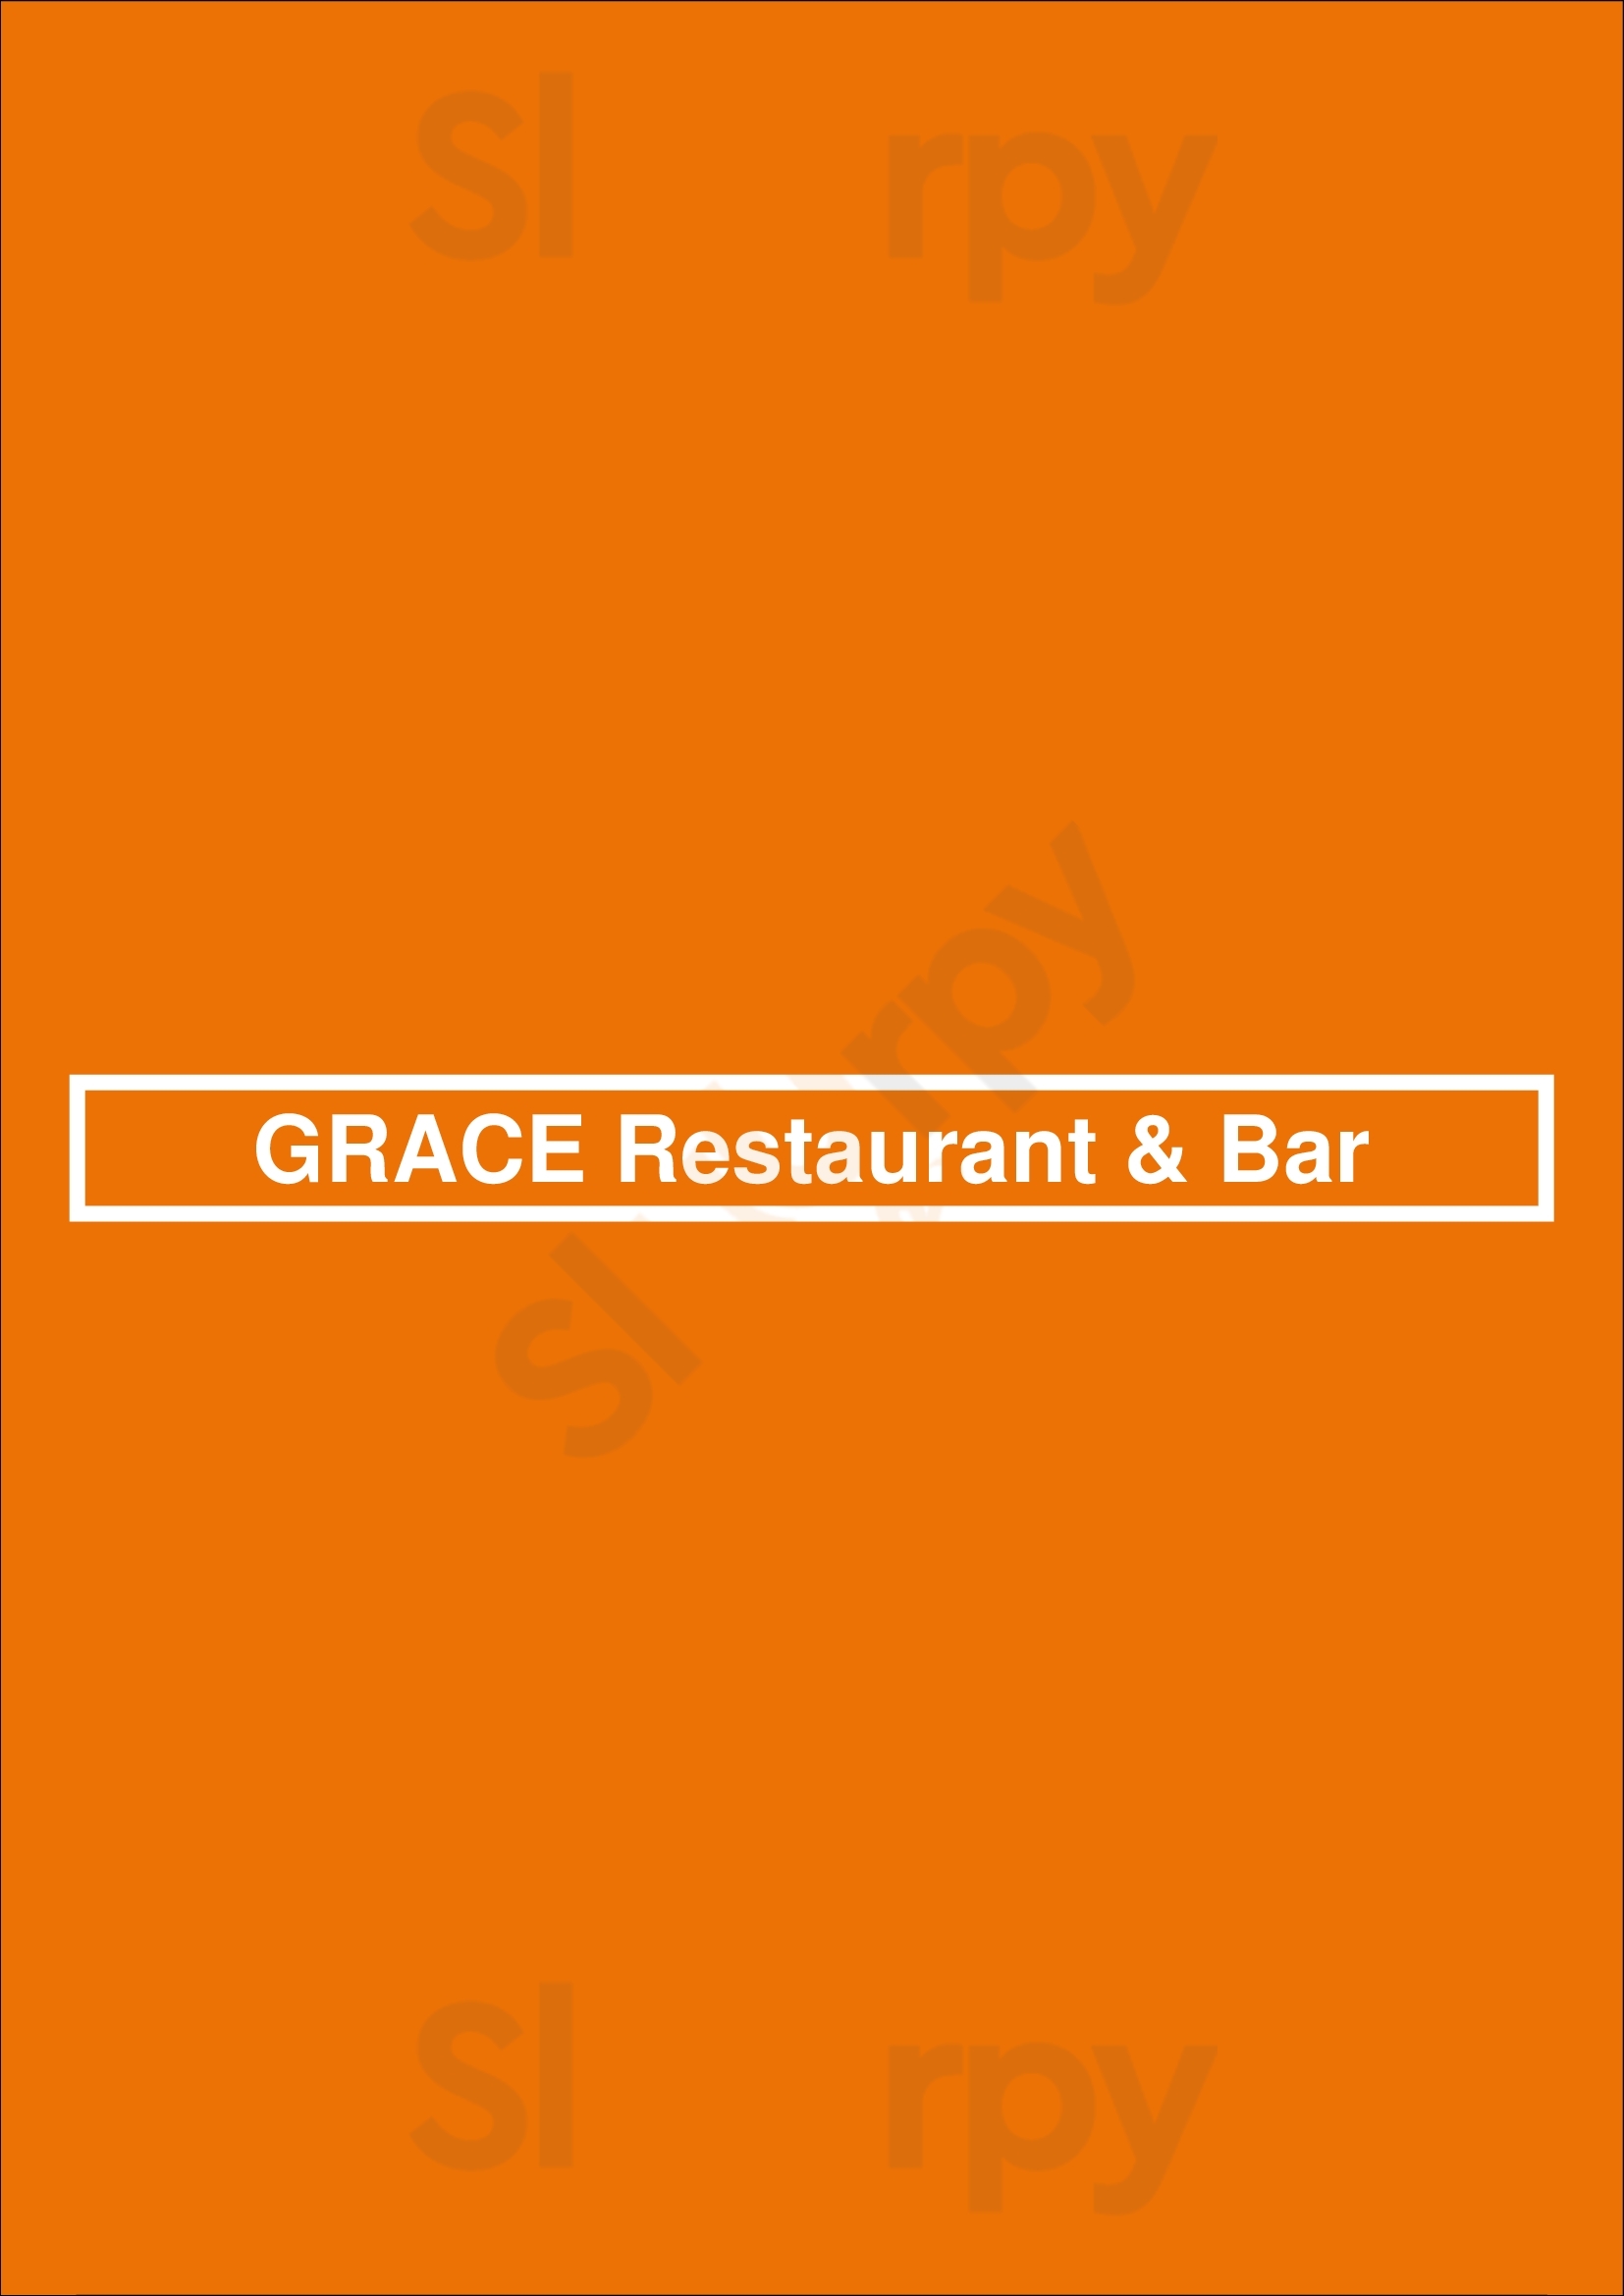 Grace Restaurant & Bar Berlin Menu - 1